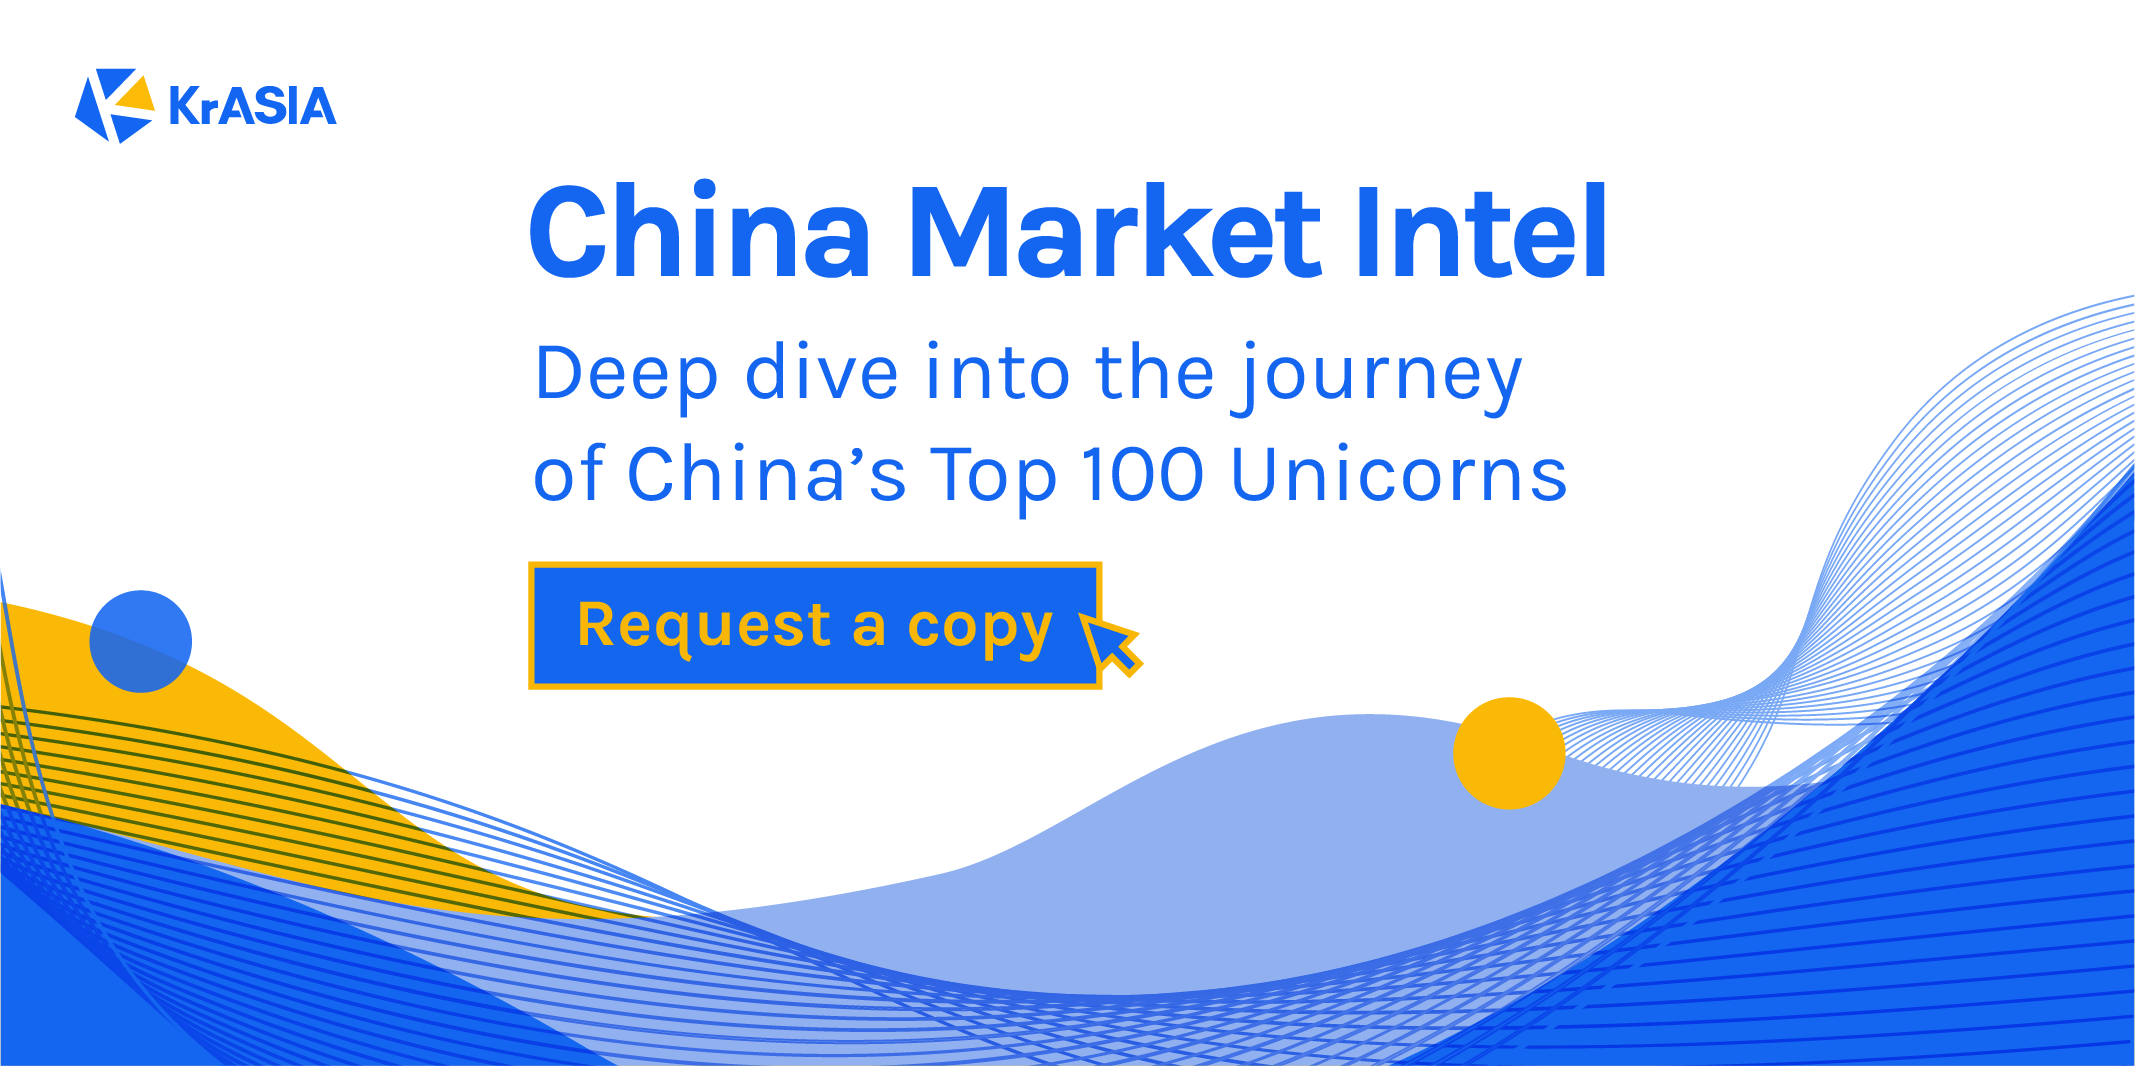 China Market Intel Report: Zoom into China’s top 100 unicorns